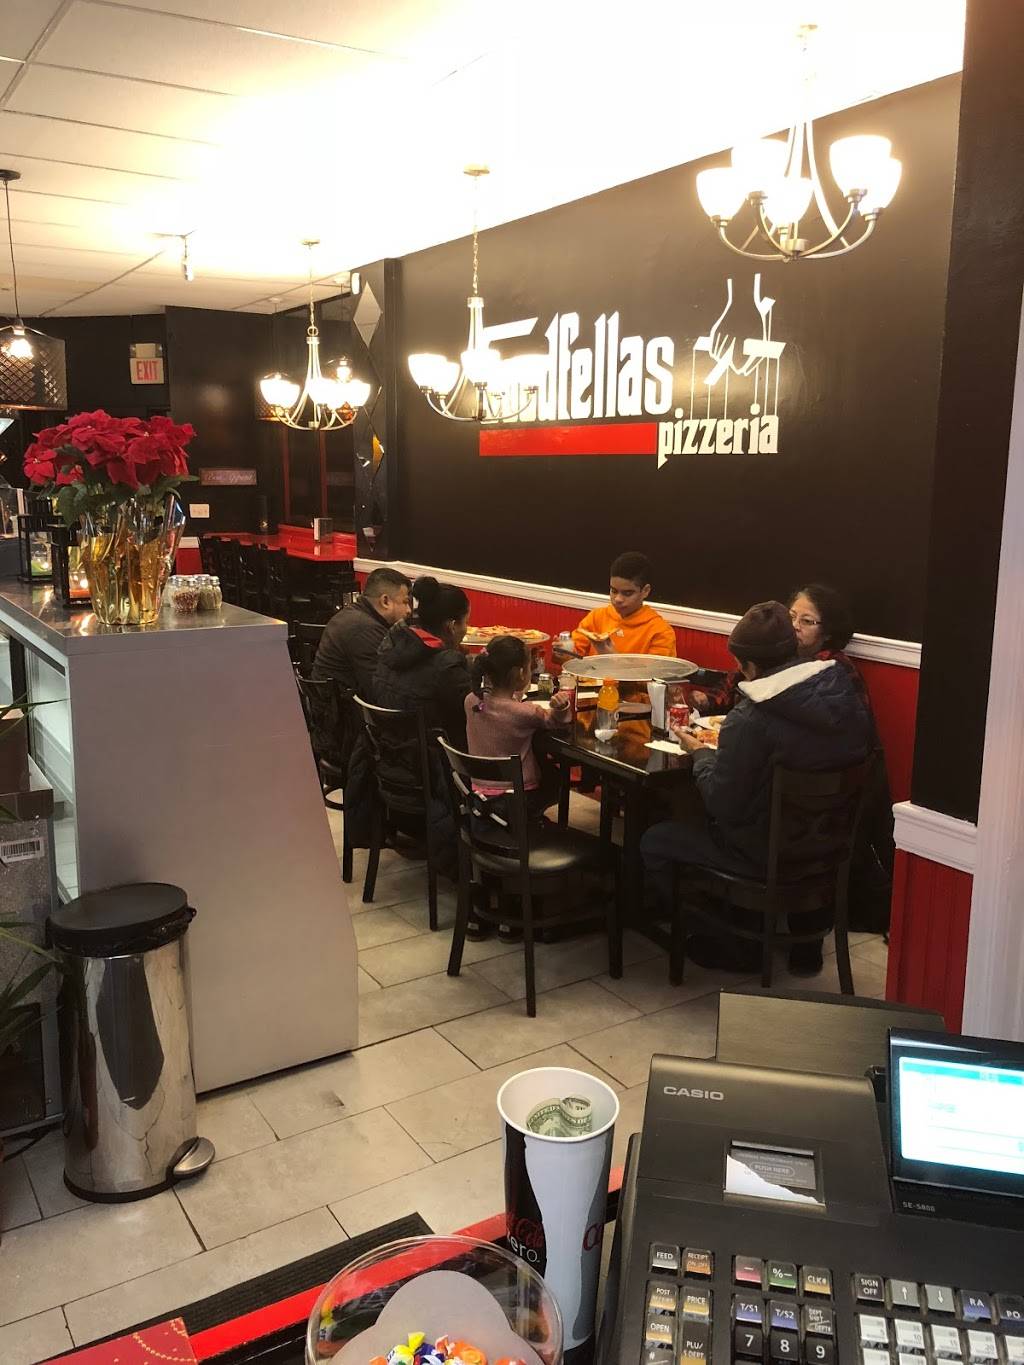 Goodfellas Pizzeria NJ | restaurant | 255 Hackensack St, Wood-Ridge, NJ 07075, USA | 2019330833 OR +1 201-933-0833